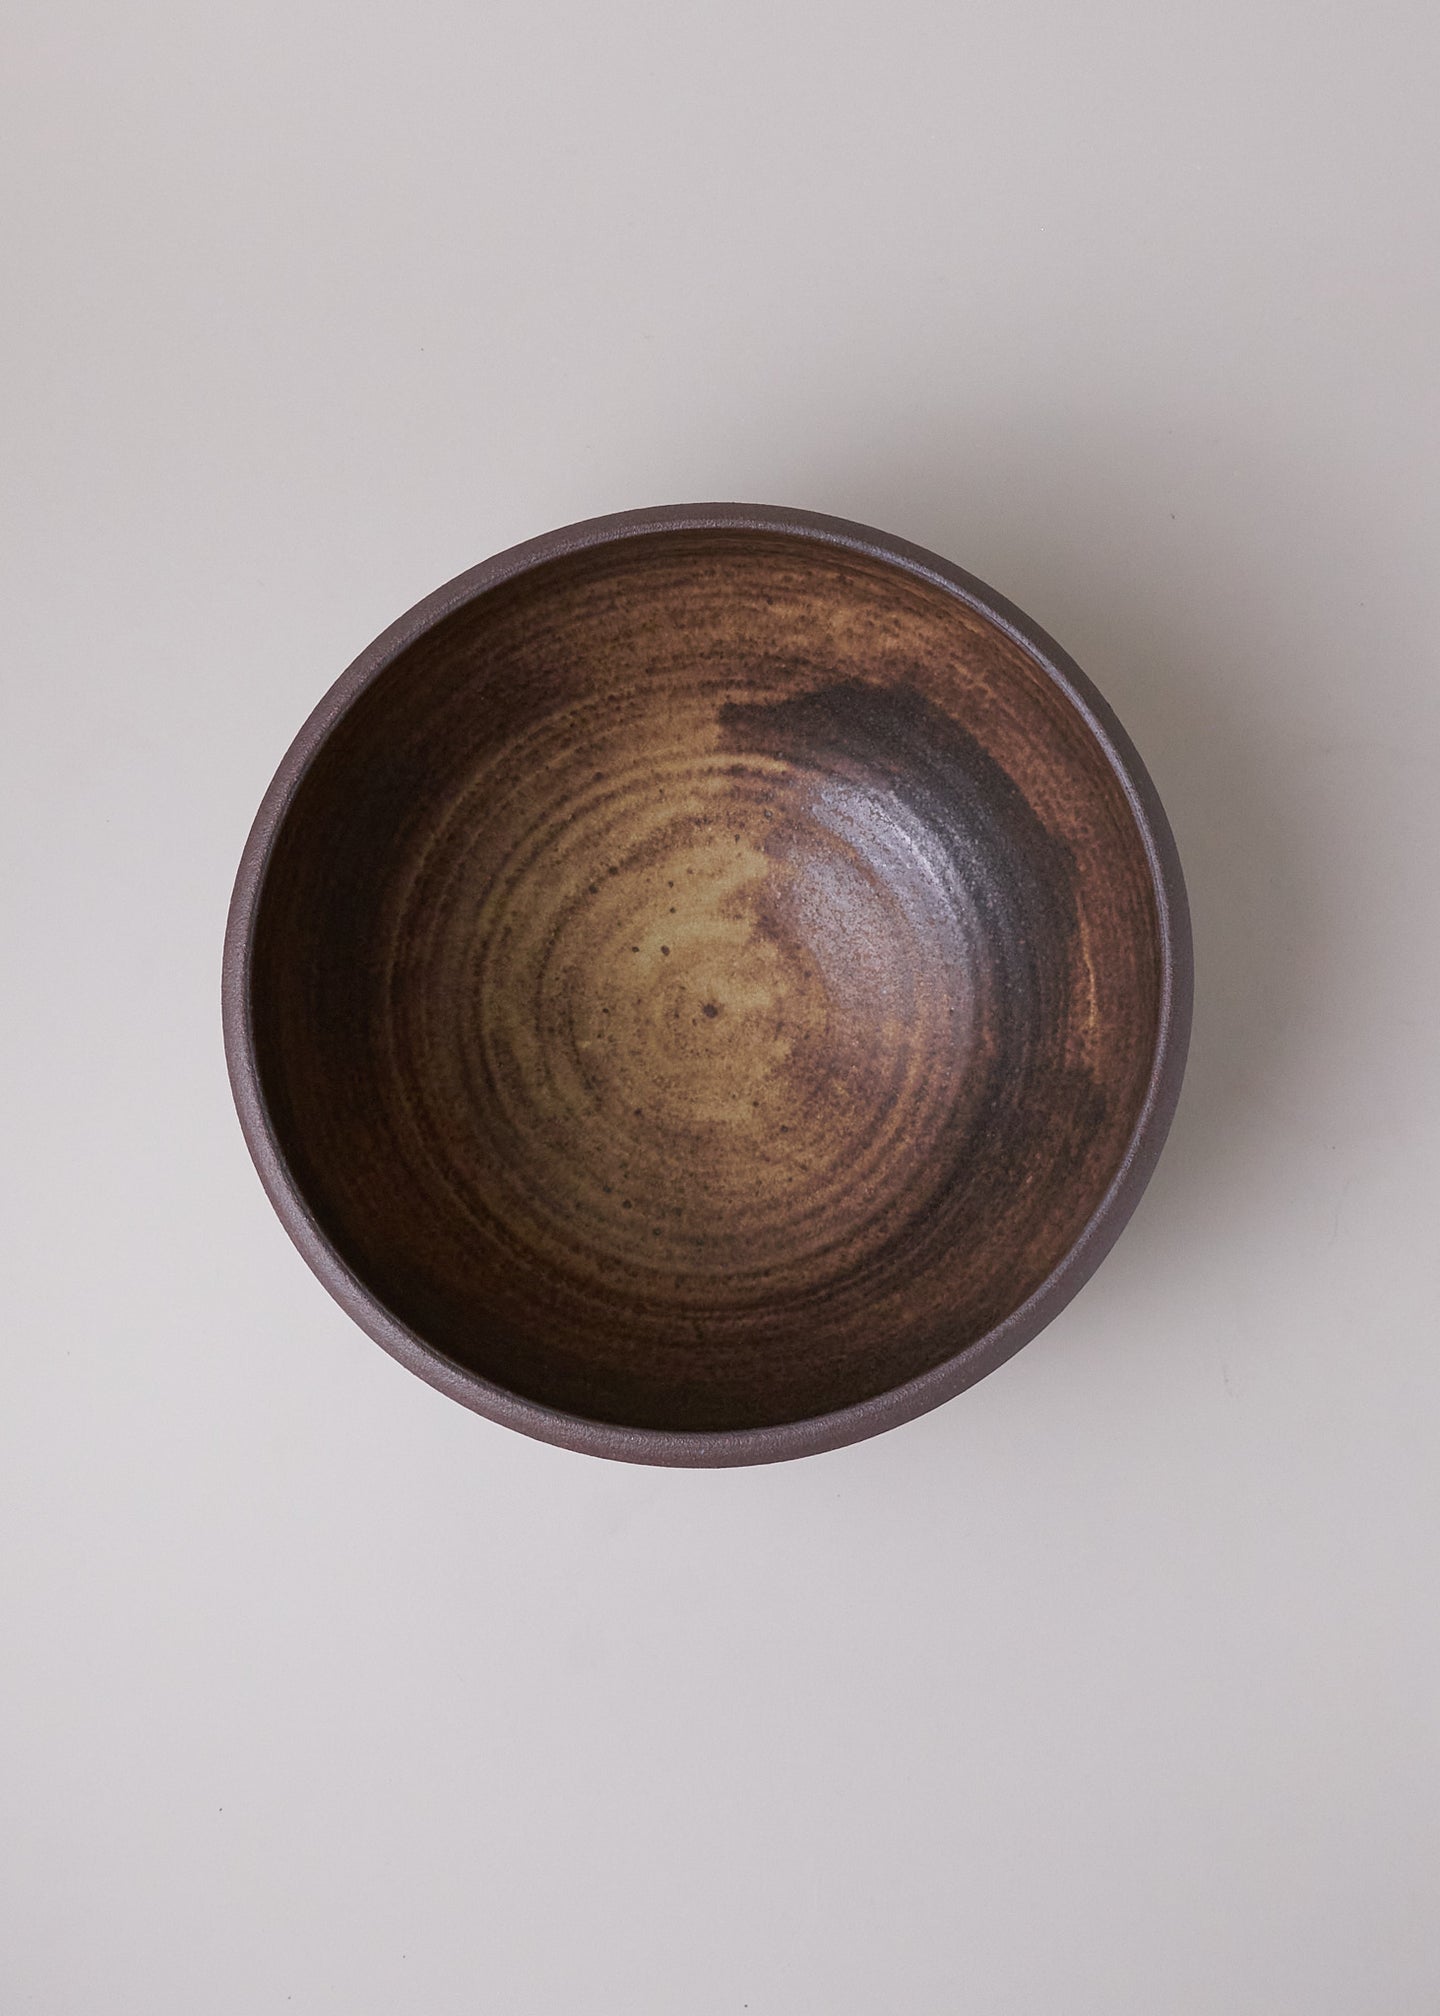 Large Ledge Bowl in Live Oak - Victoria Morris Pottery